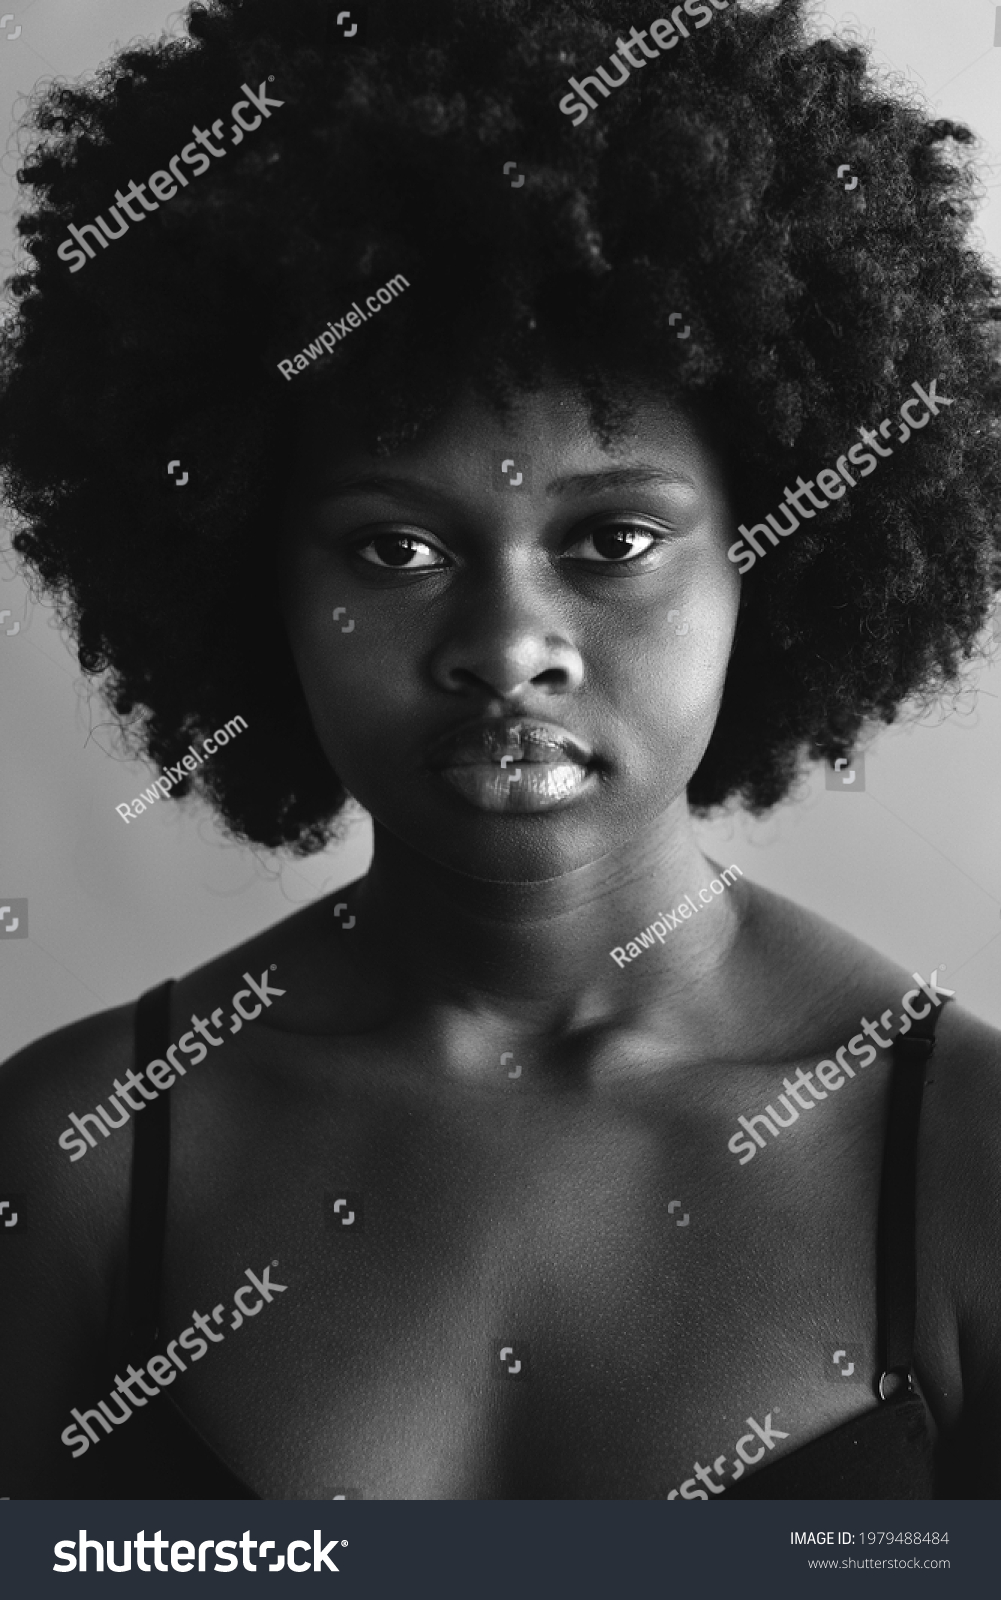 aspieya duanz recommends fine naked black women pic